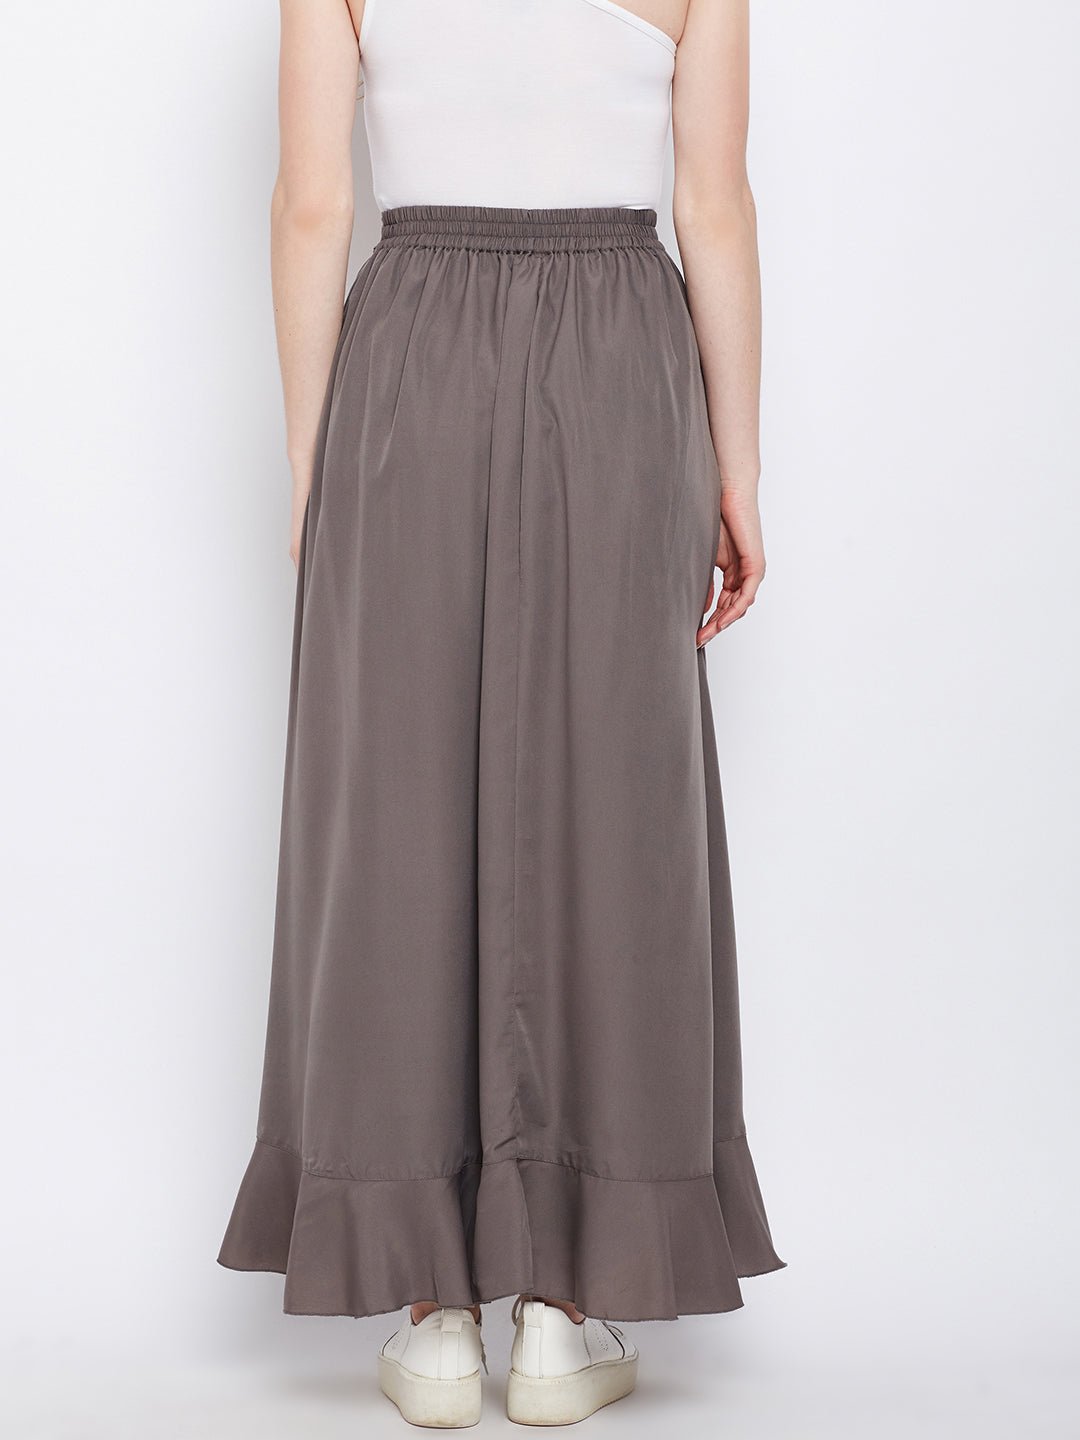 Folk Republic Women Solid Grey Waist Tie-Up Ruffled Maxi Skirt with Attached Trousers - #folk republic#